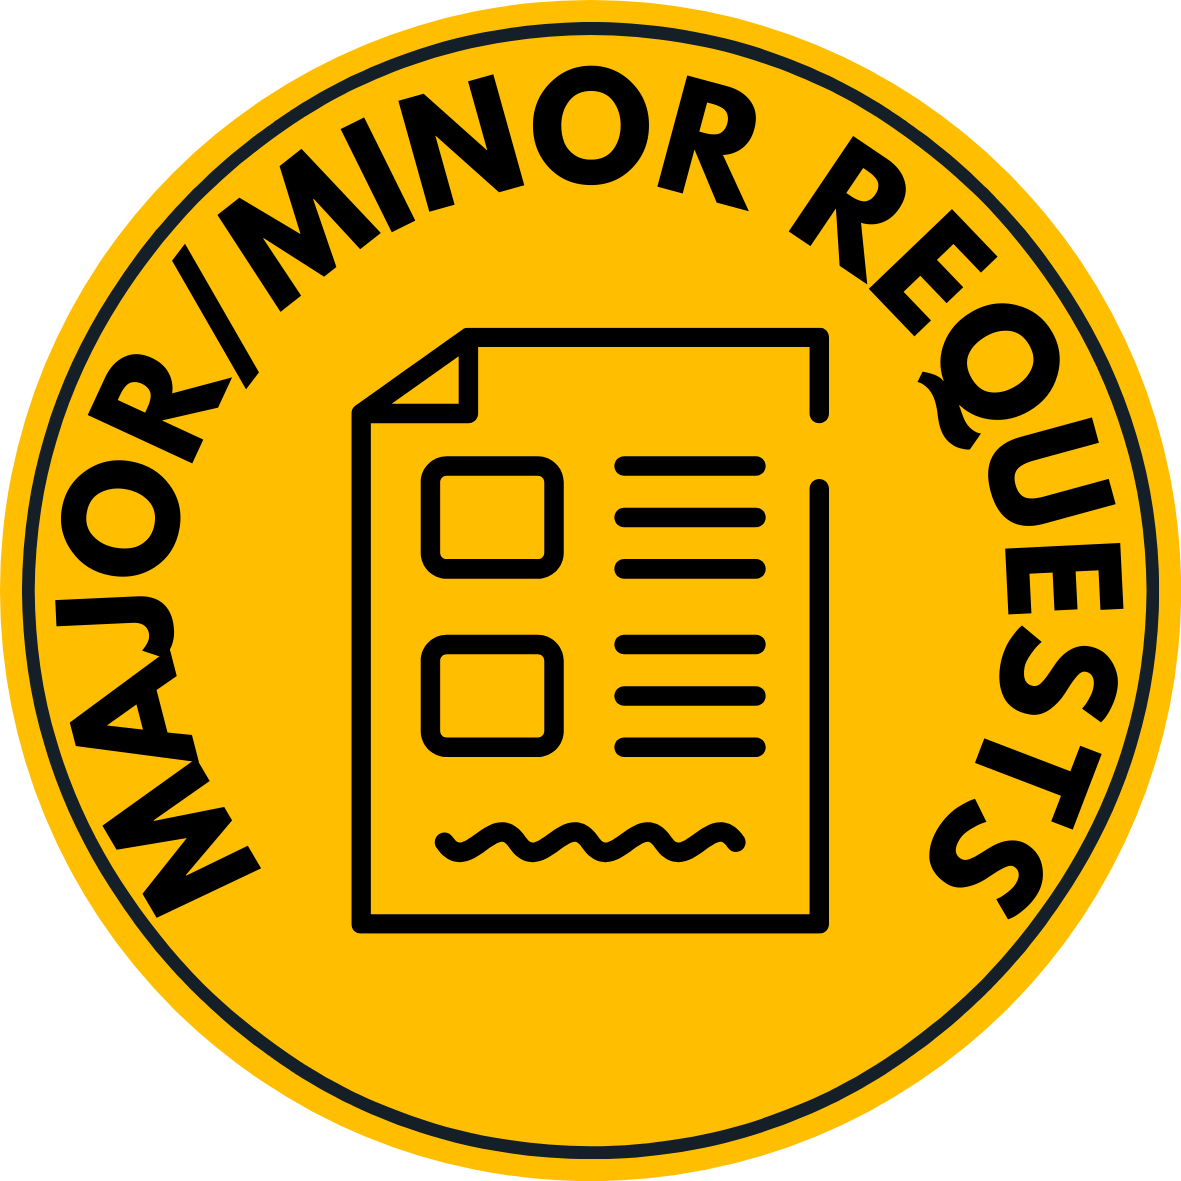 Major/Minor Requests